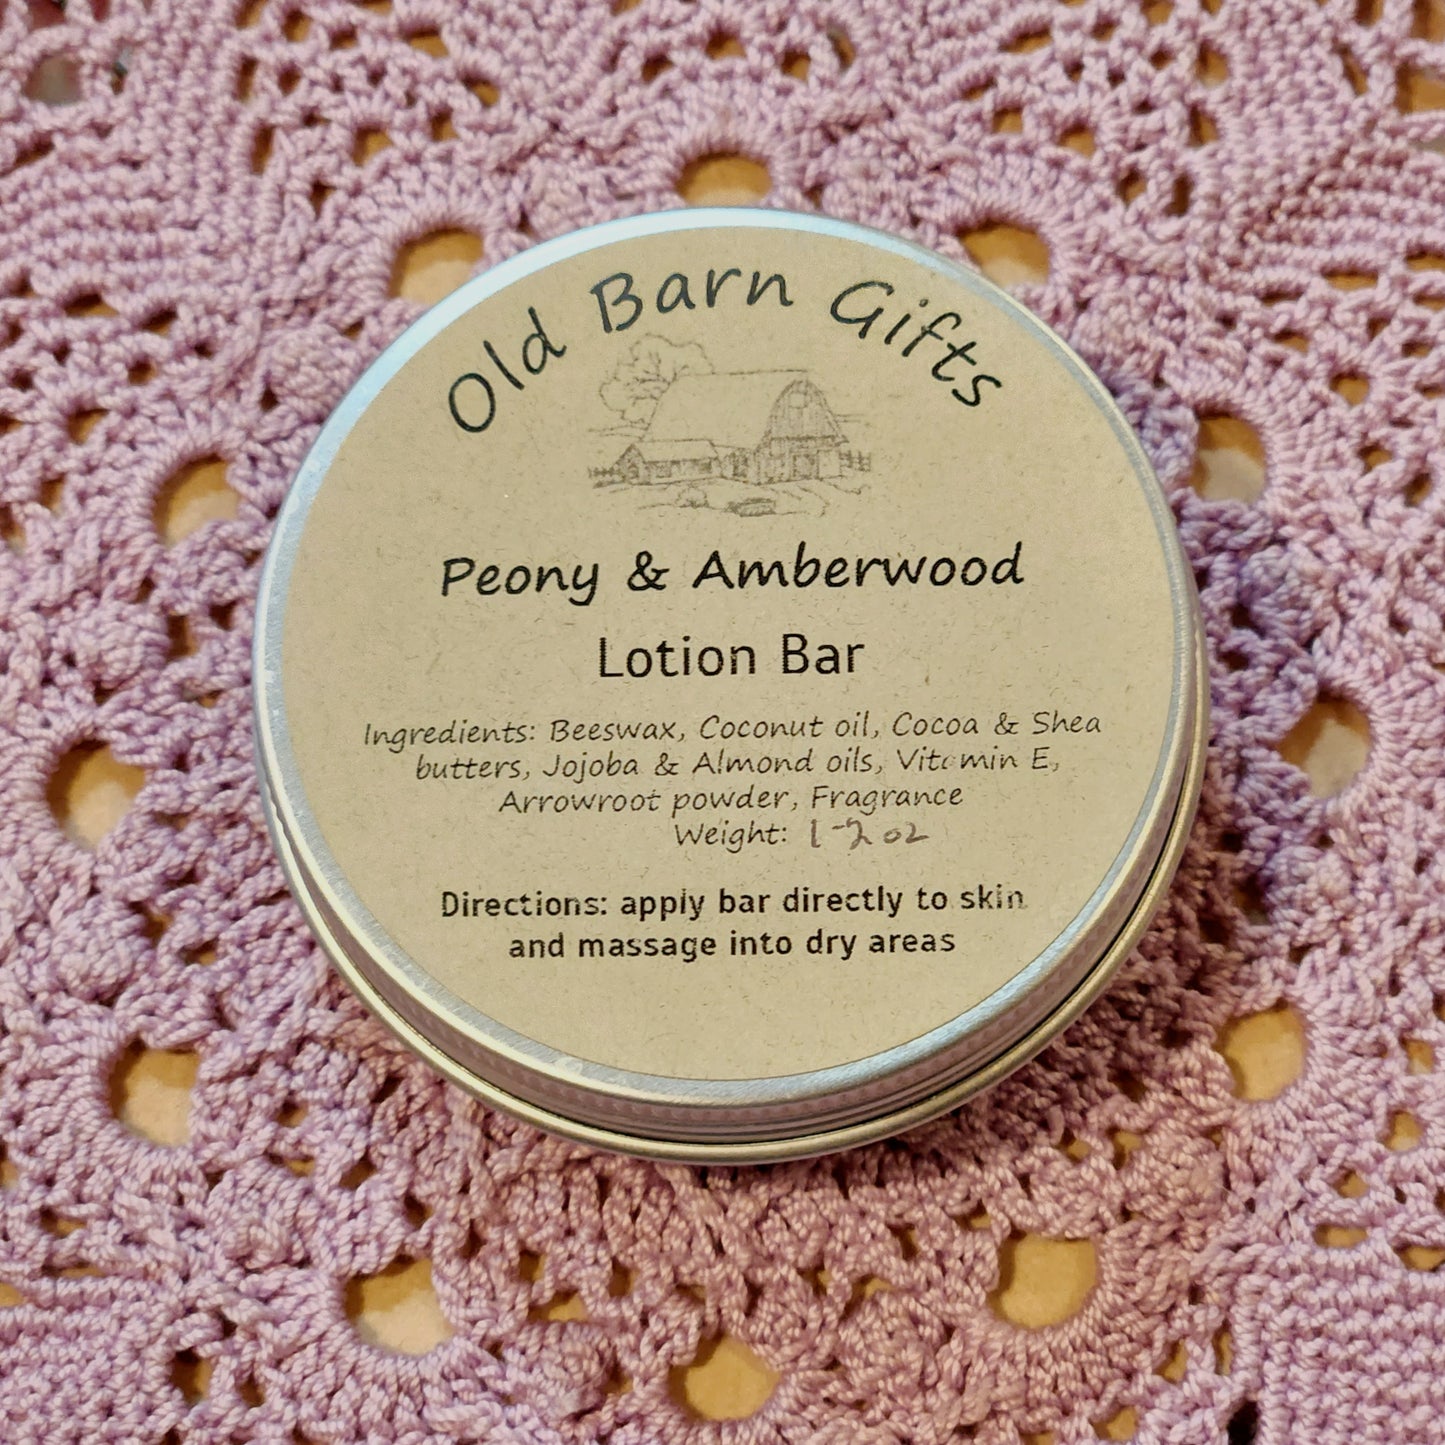 Old Barn Gifts - Homemade Circular Lotion Bar - Peony & Amberwood